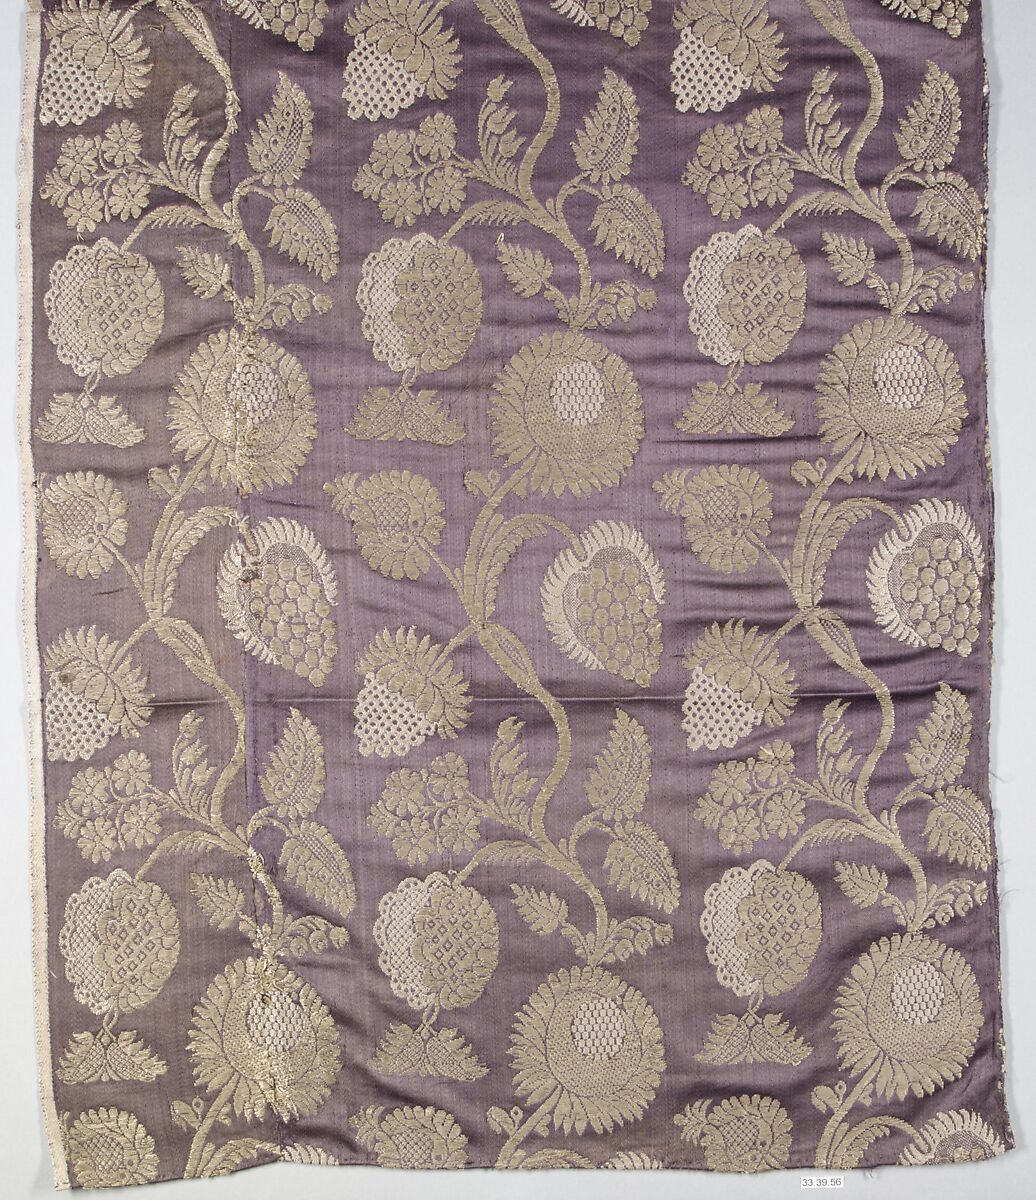 Piece, Silk and metal thread, Russian 